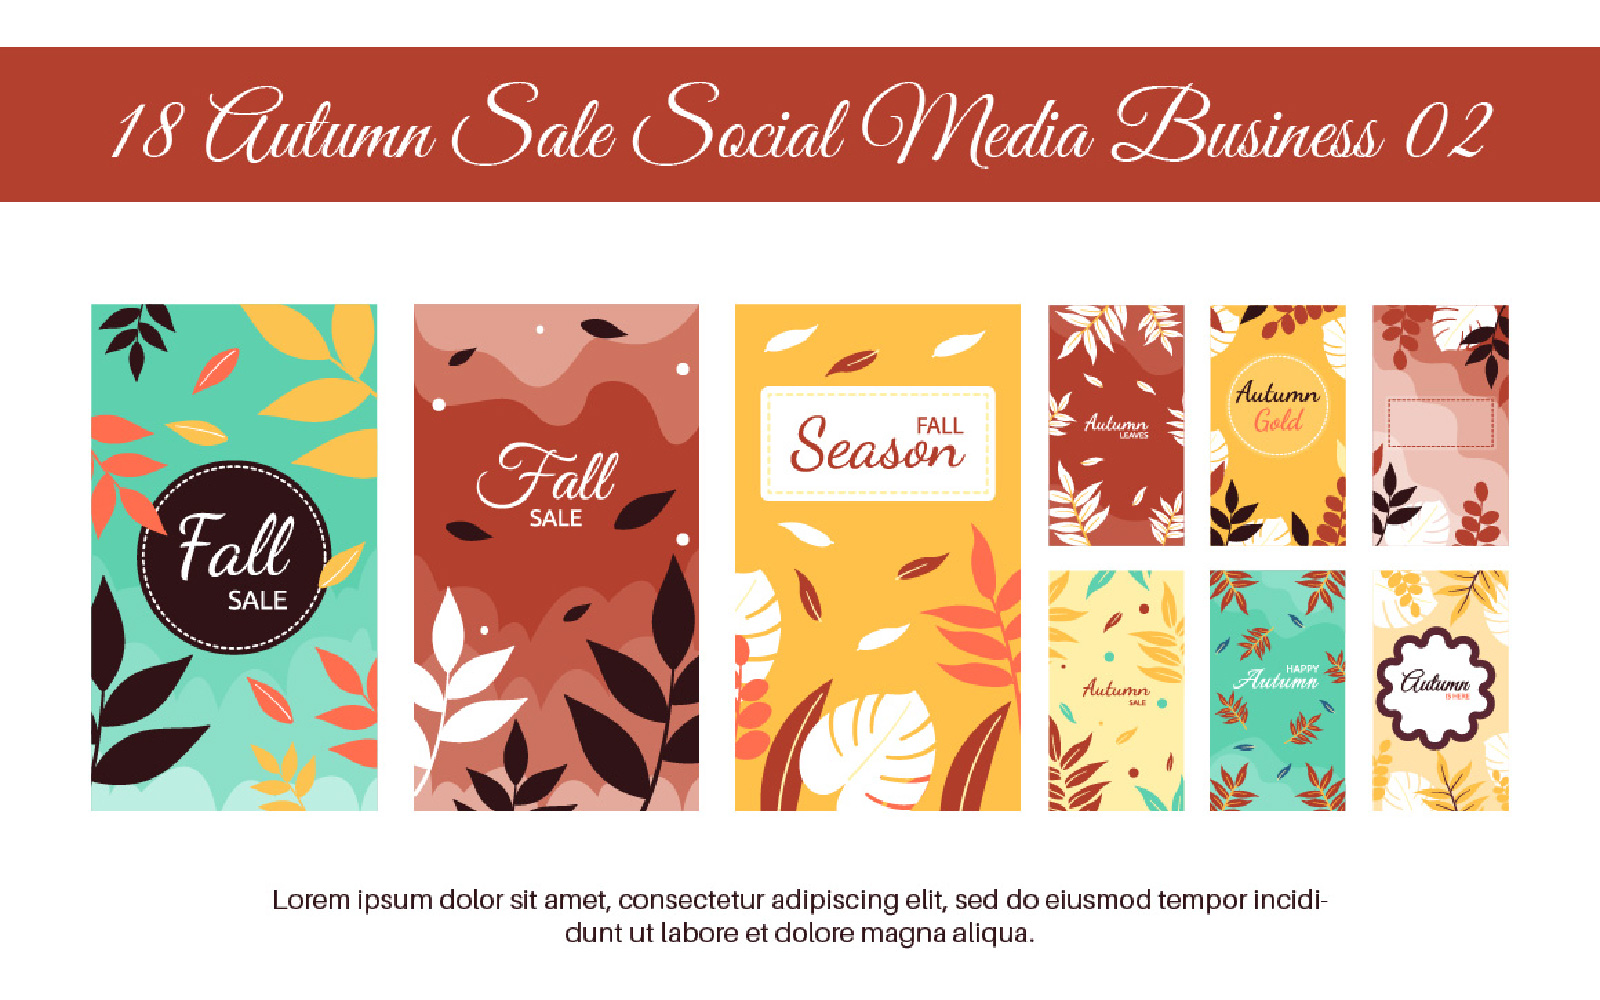 18 Autumn Sale Social Media Business 02